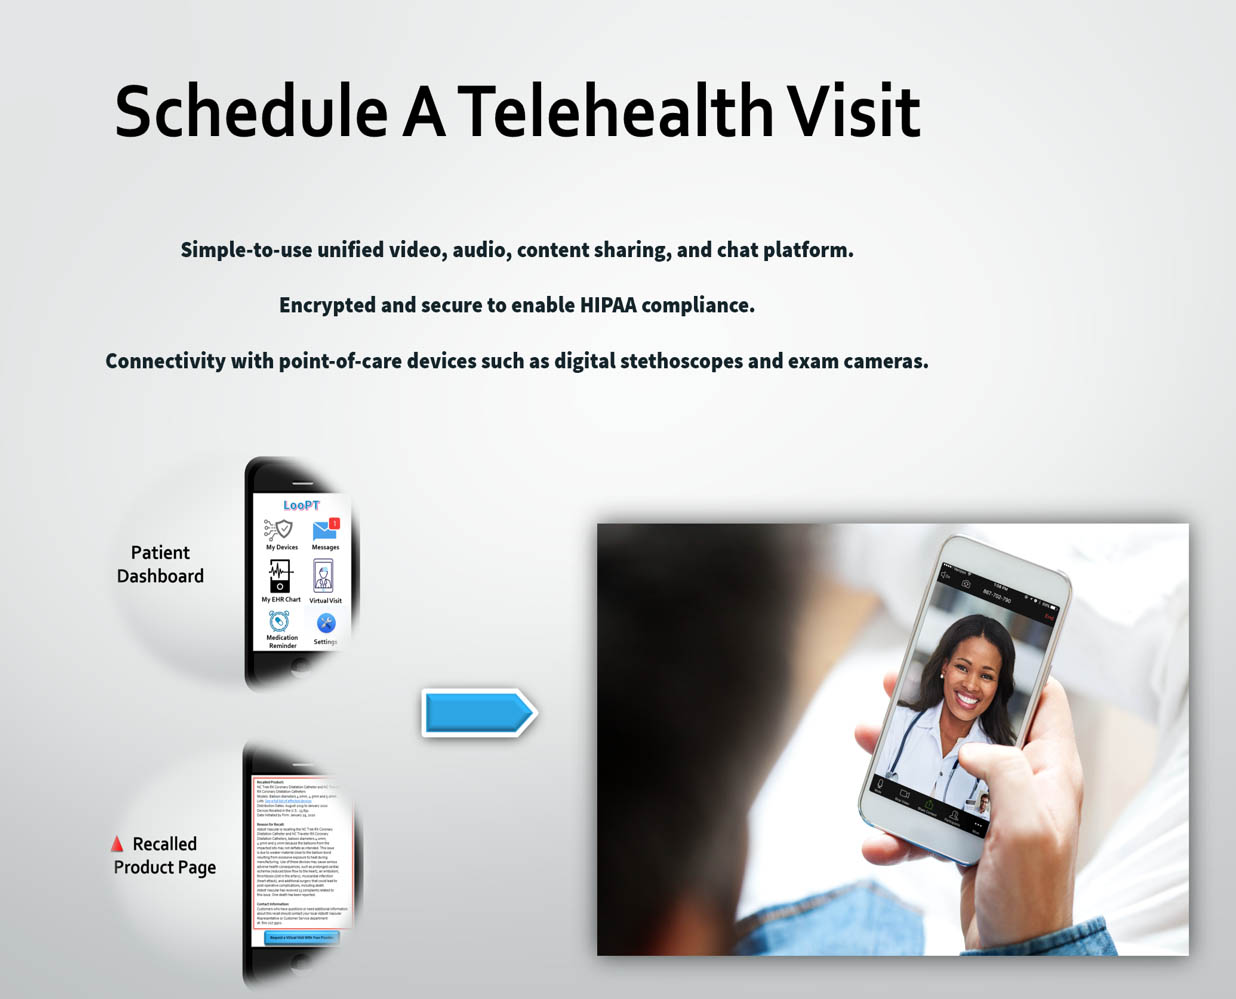 Schedule a telehealth visit